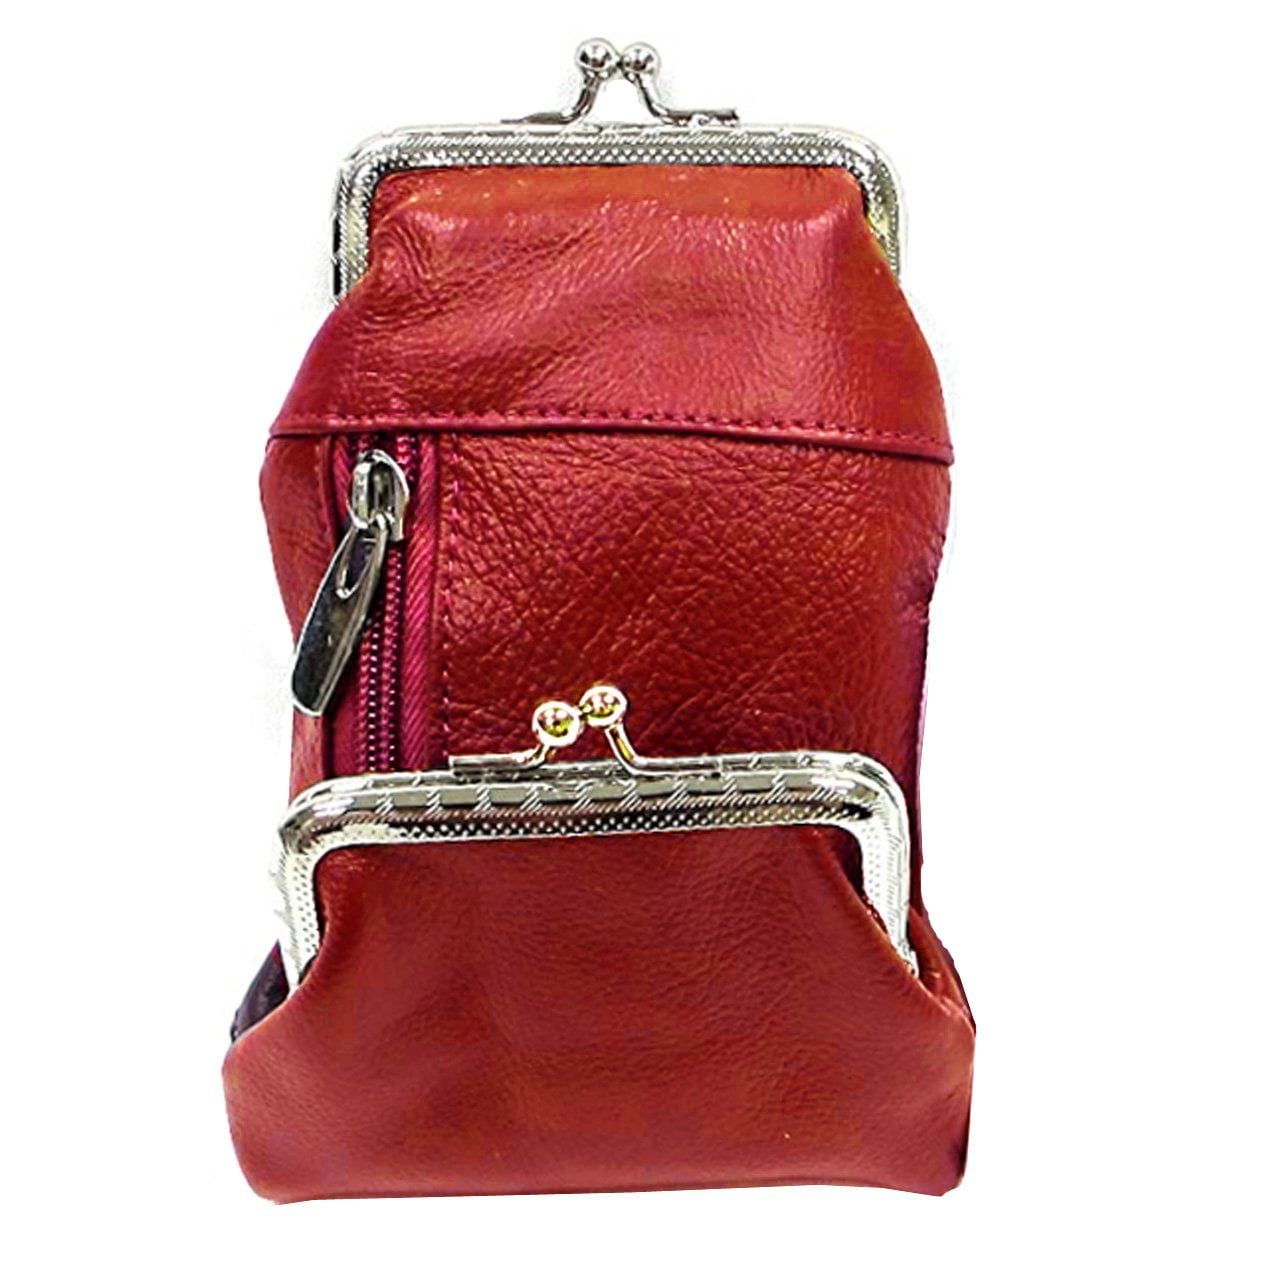 Premium Leather Cigarette Case & Clutch Wallet | WalletBe